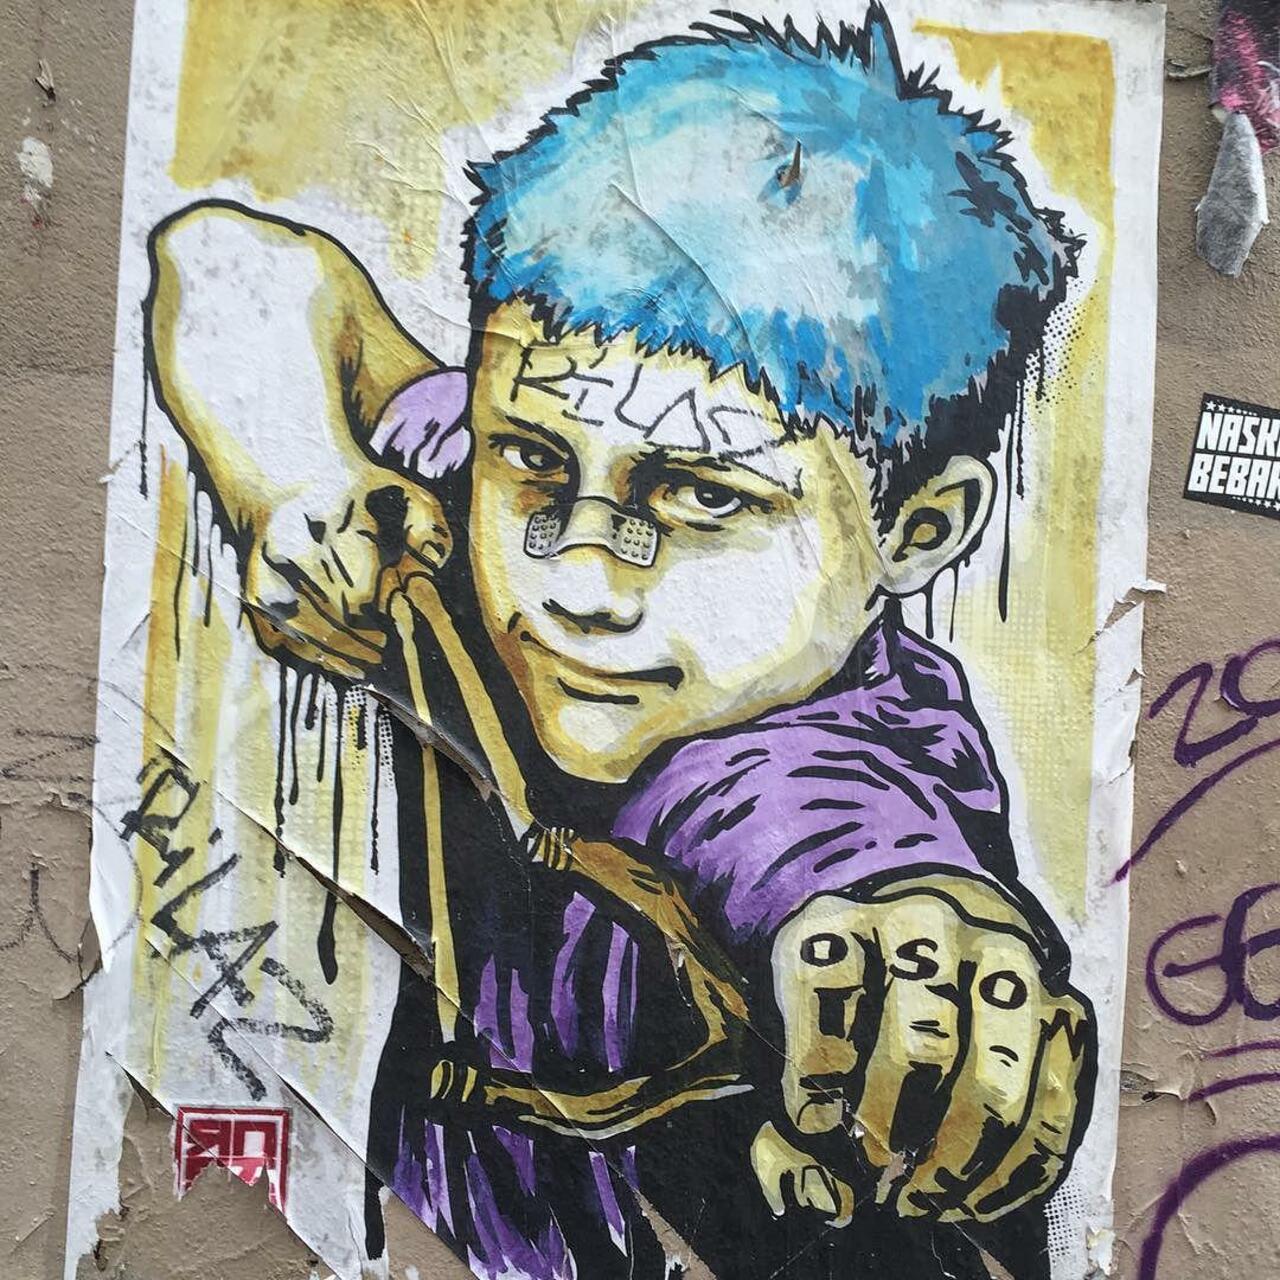 RT @circumjacent_fr: #Paris #graffiti photo by @catscoffeecreativity http://ift.tt/1Pv2fpf #StreetArt http://t.co/pFveEW2H6M